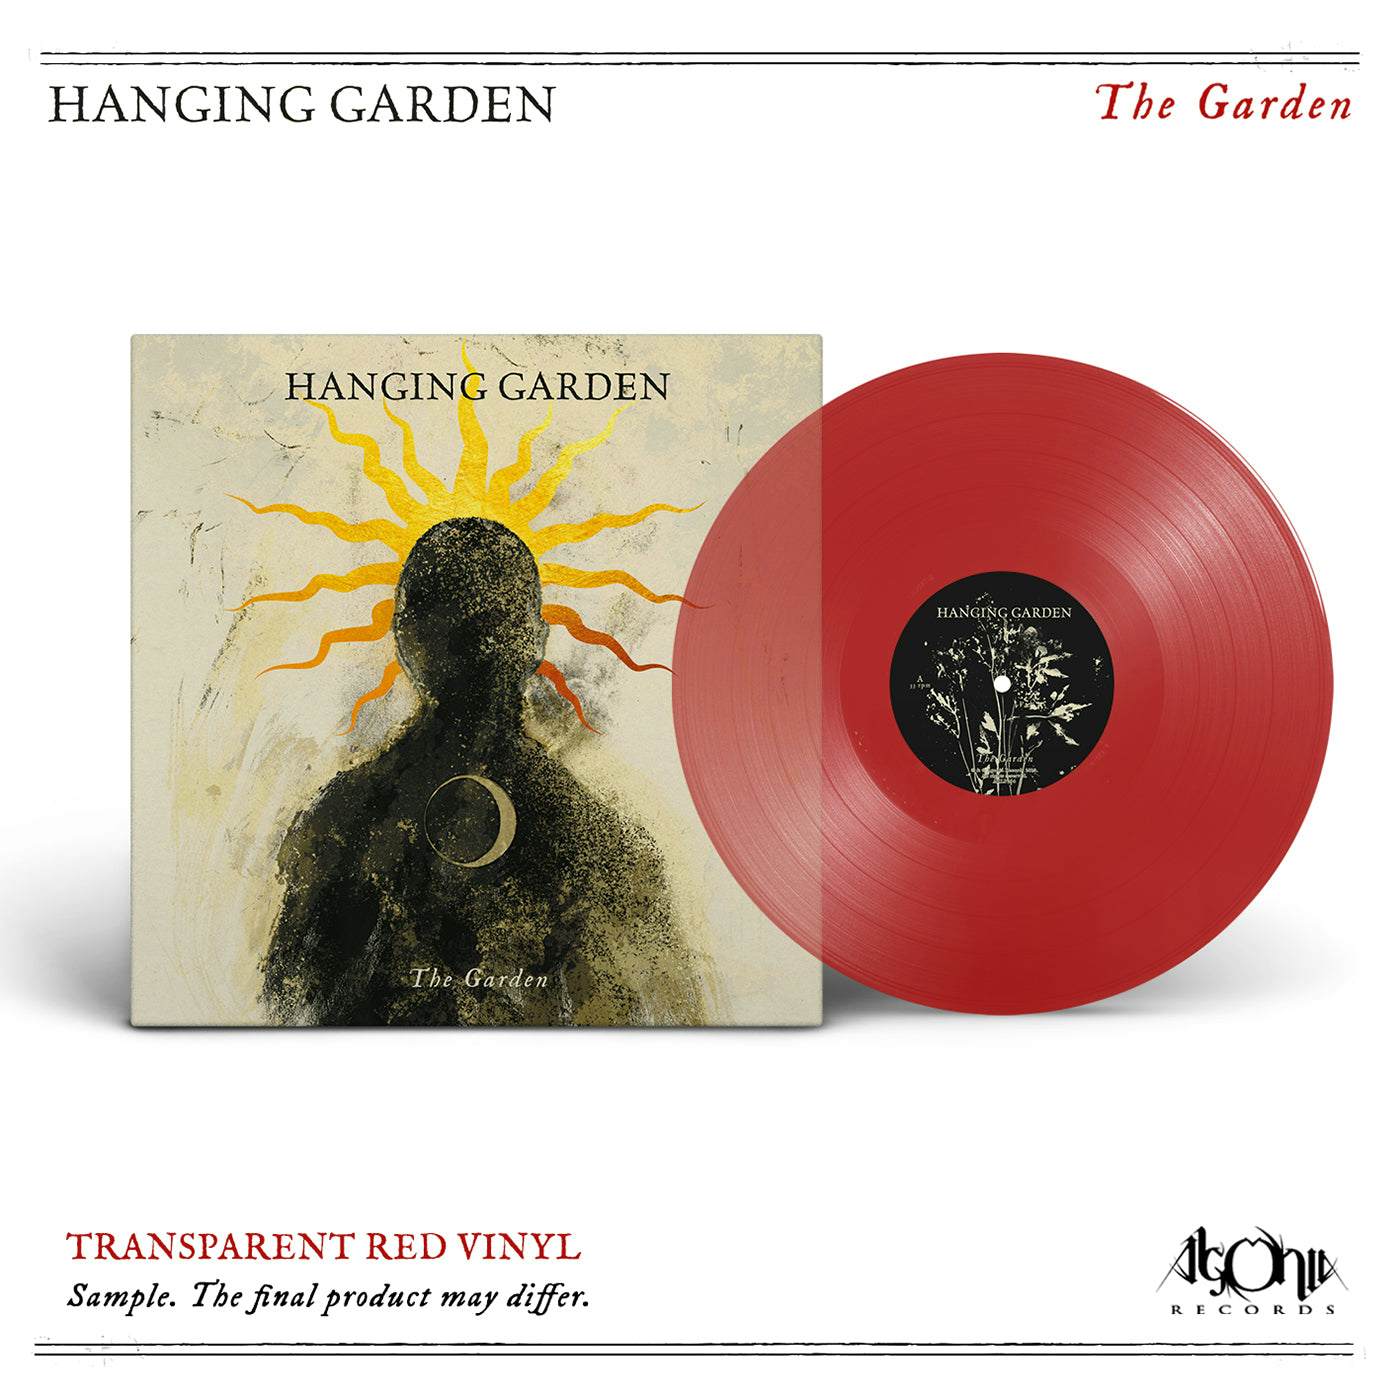 Hanging Garden "The Garden (red vinyl)" Limited Edition 12"